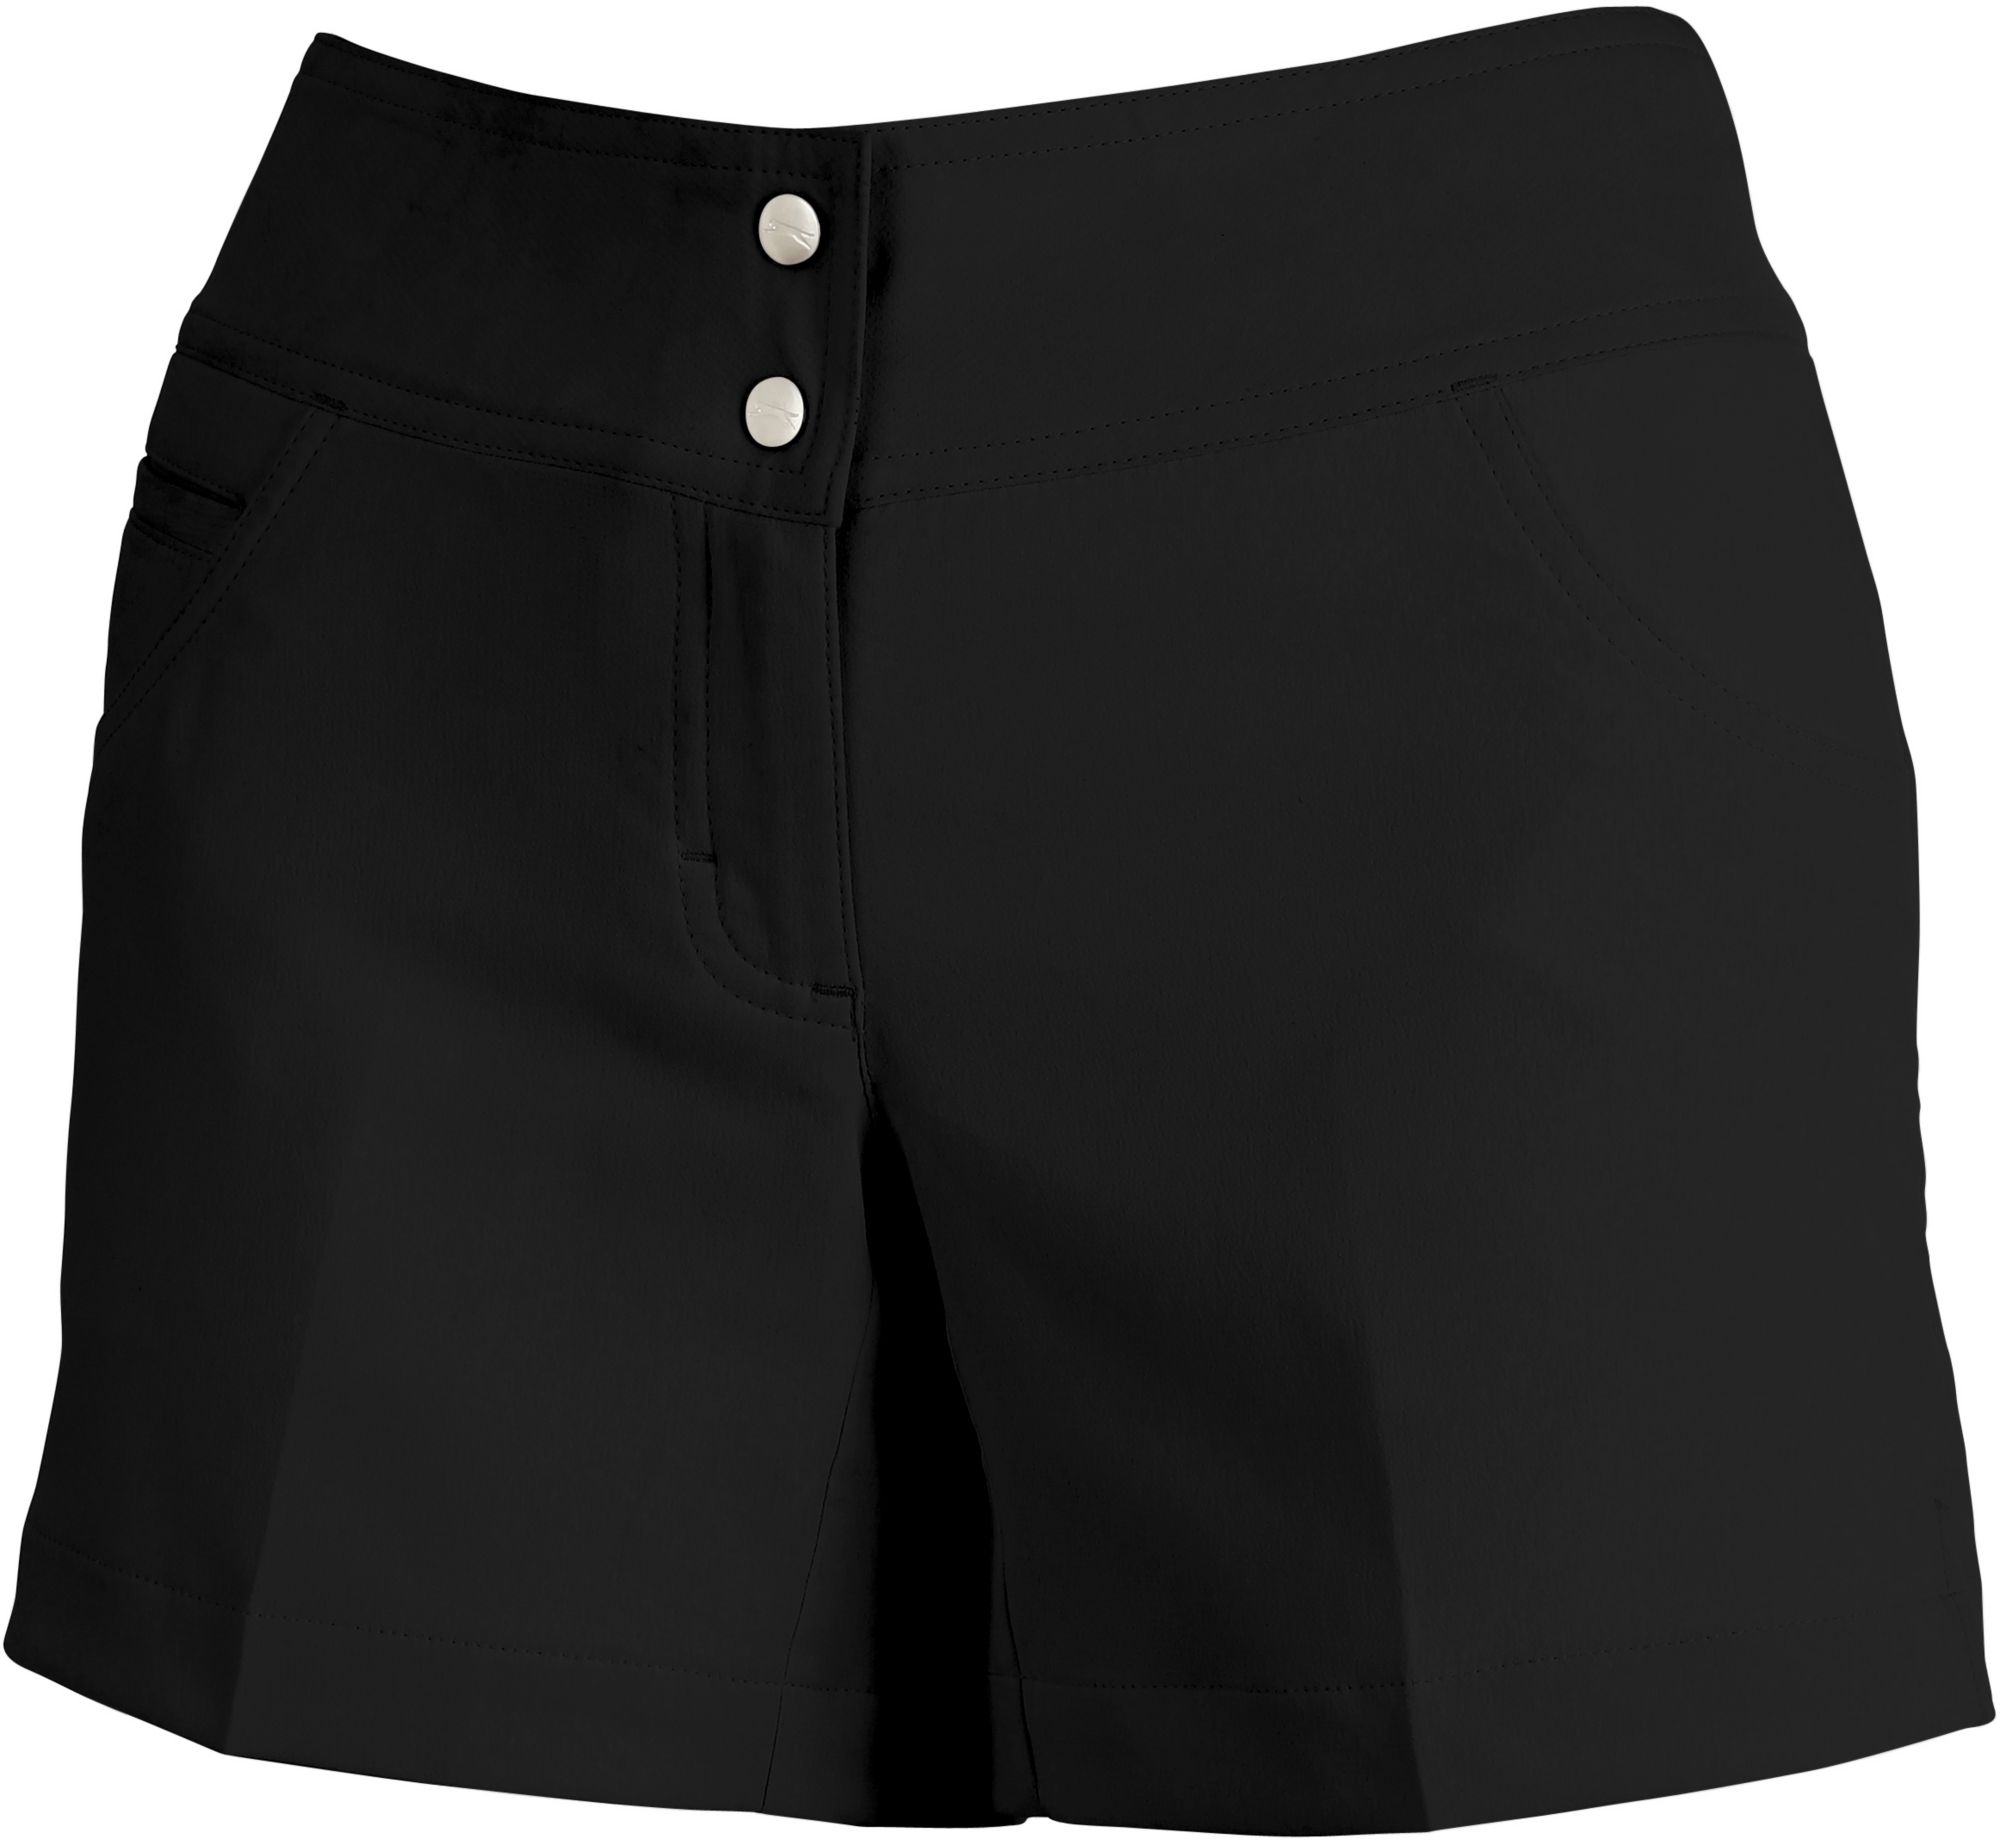 nike womens golf shorts clearance